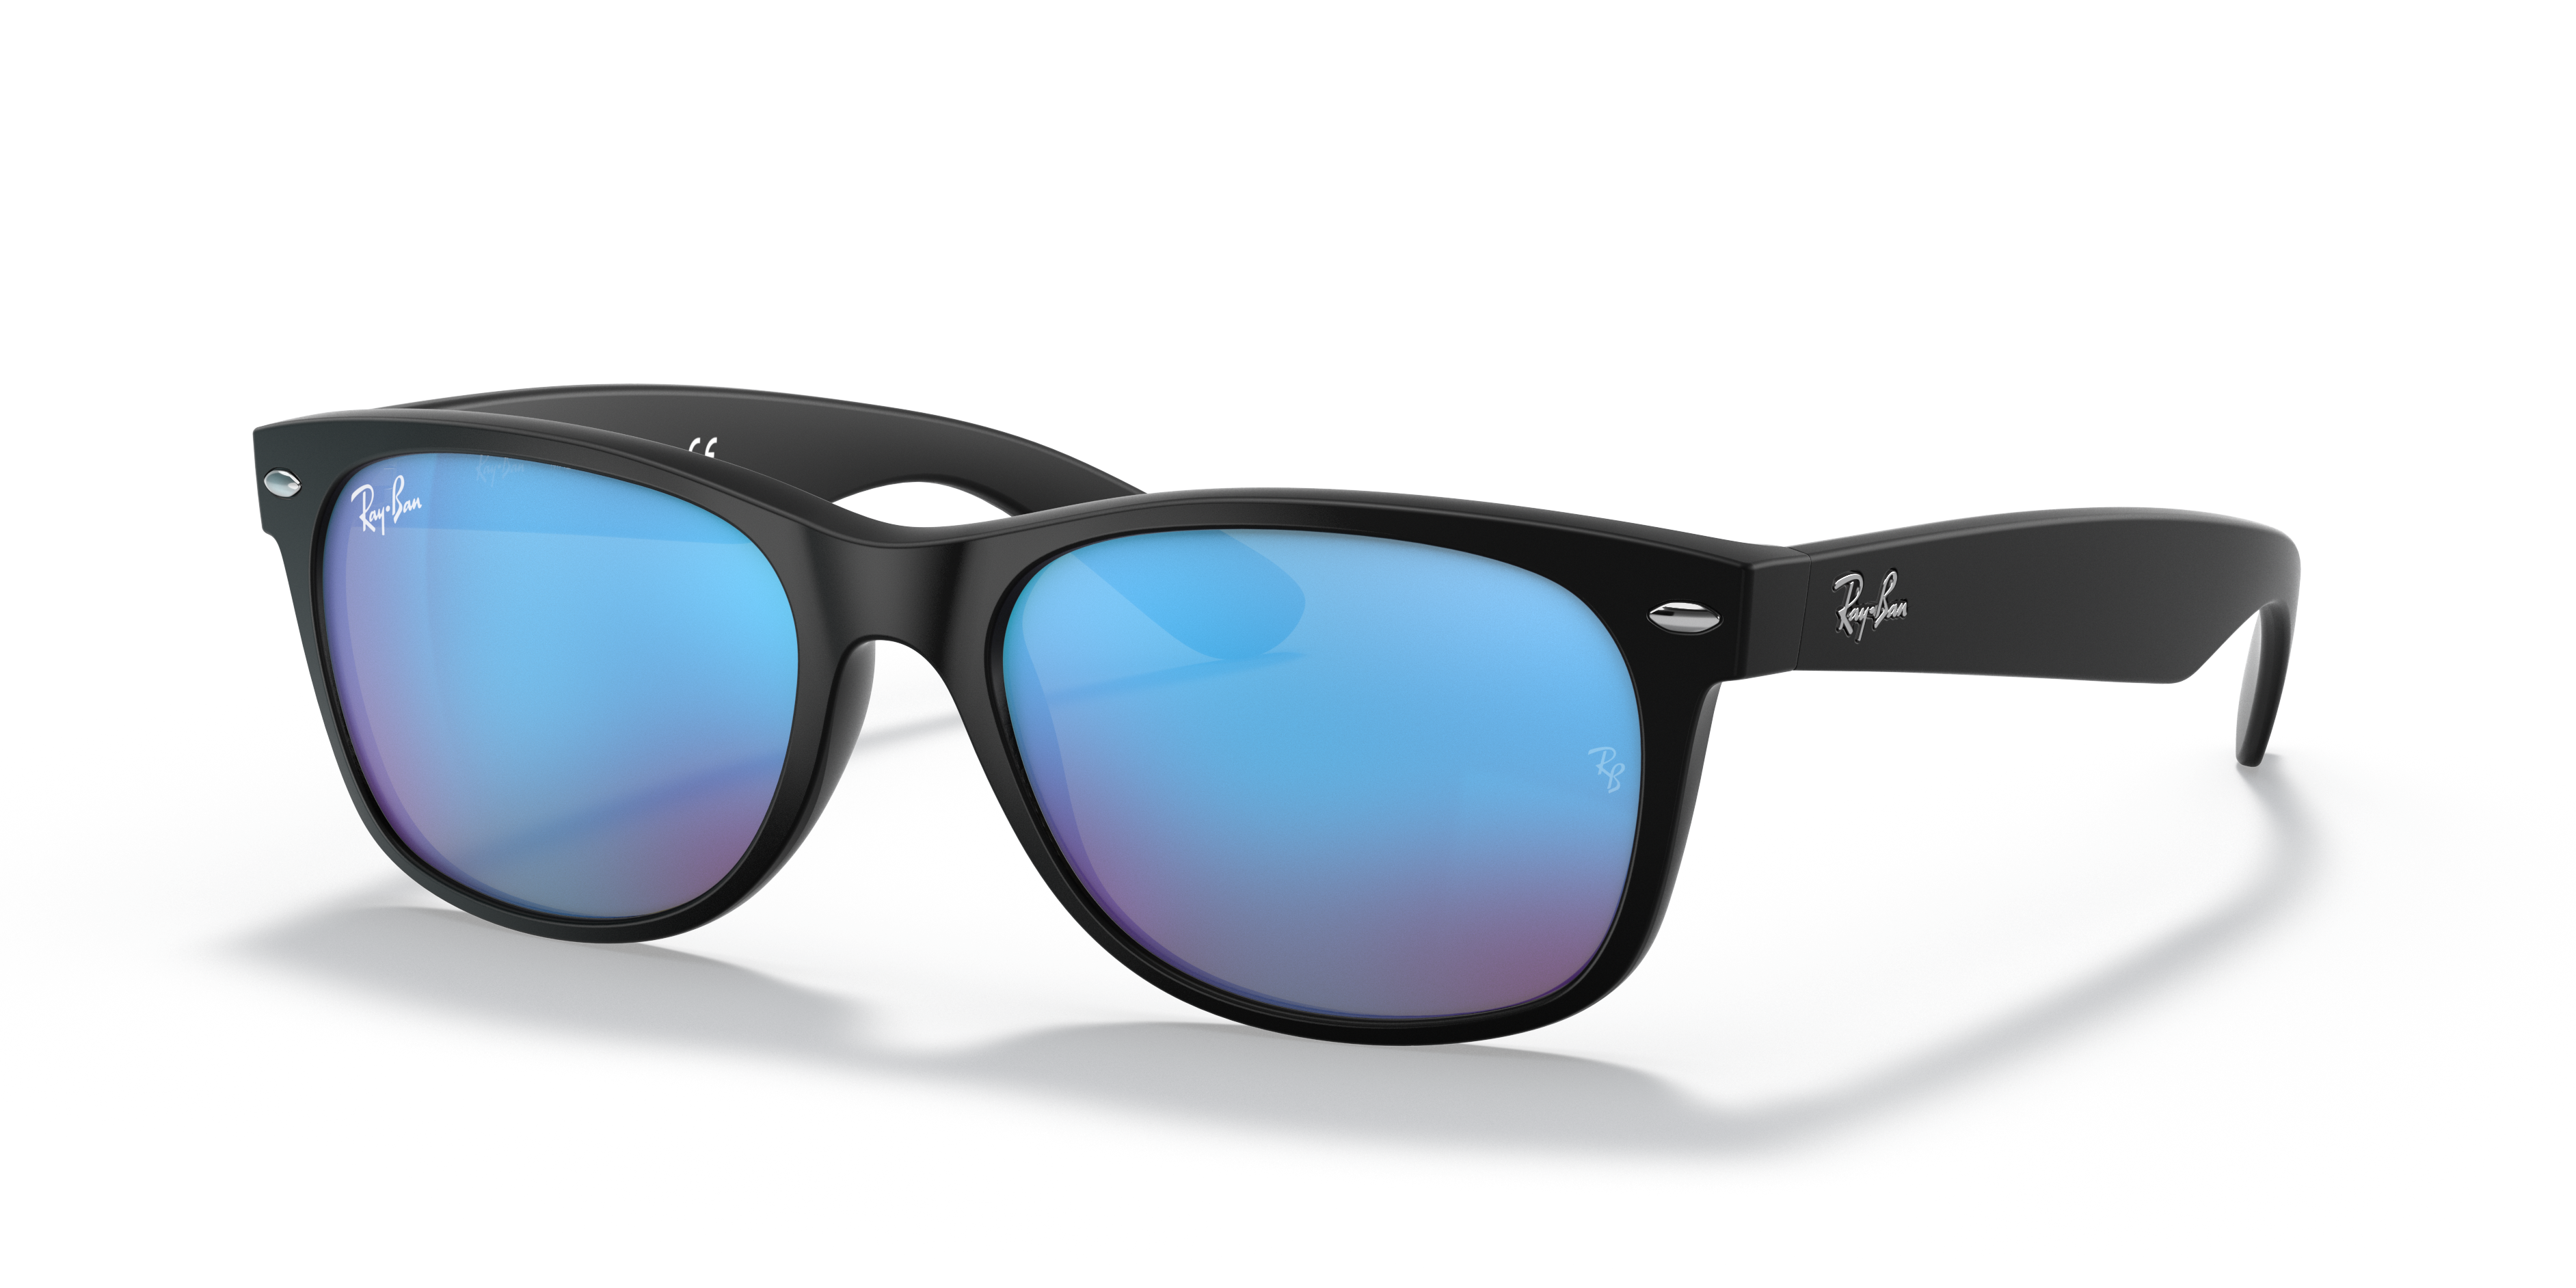 New Wayfarer Flash Sunglasses in Black and Blue | Ray-Ban®